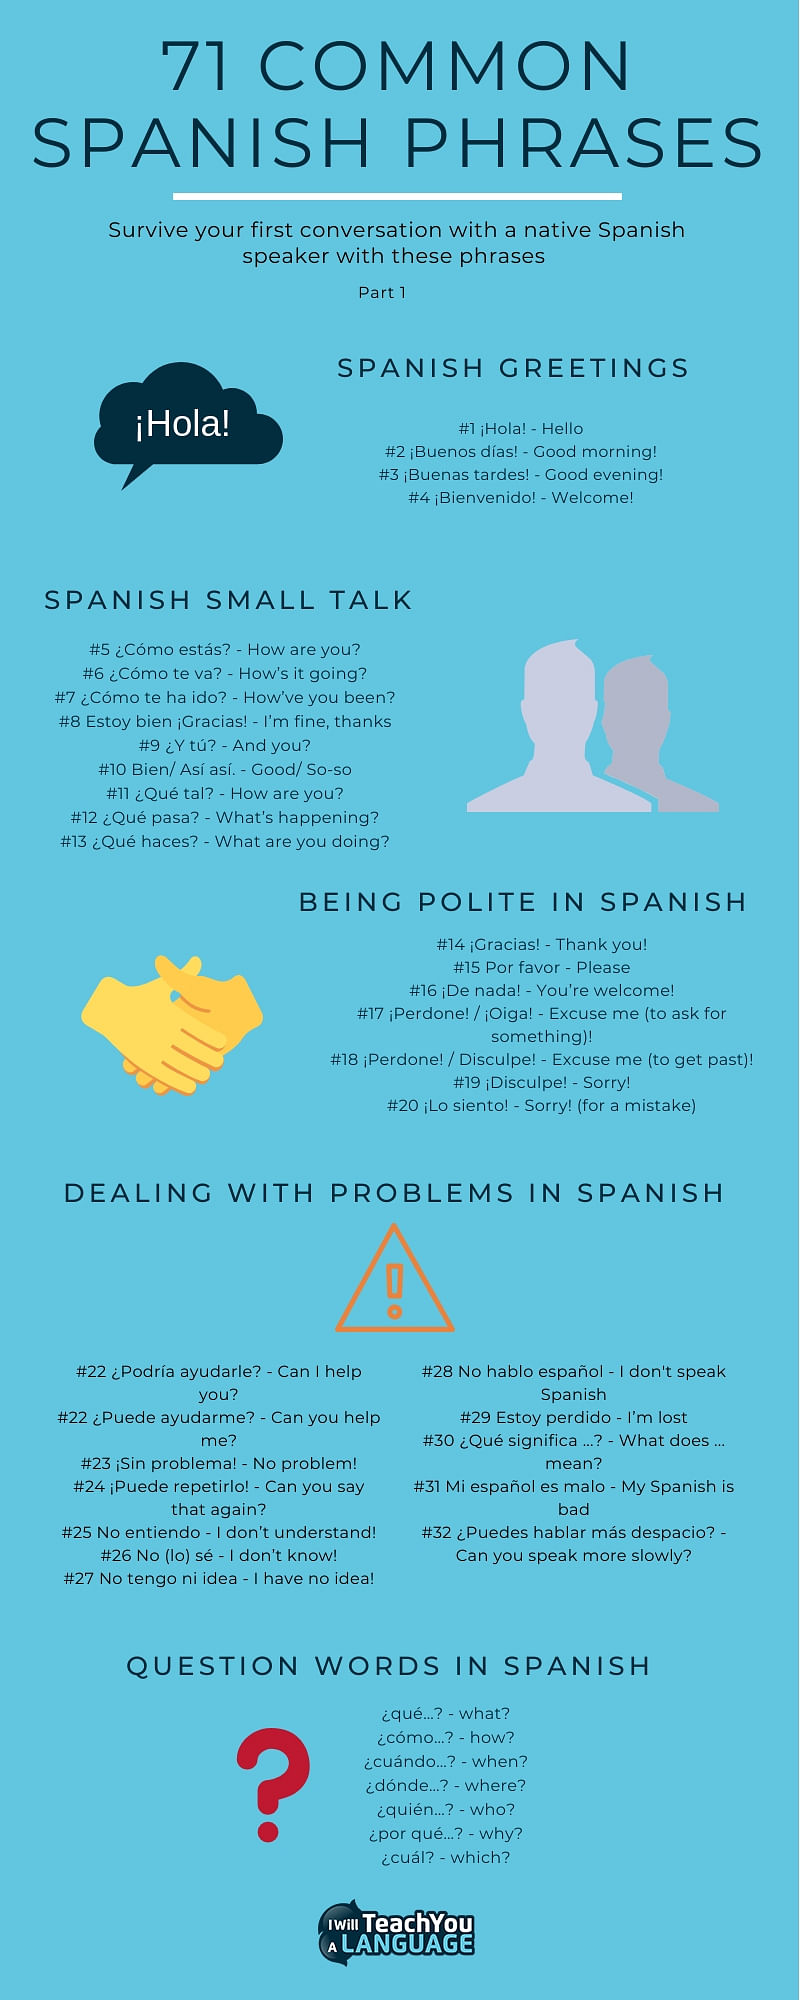 Days Of The Week in Spanish: Pronunciation, Sentences & Quiz